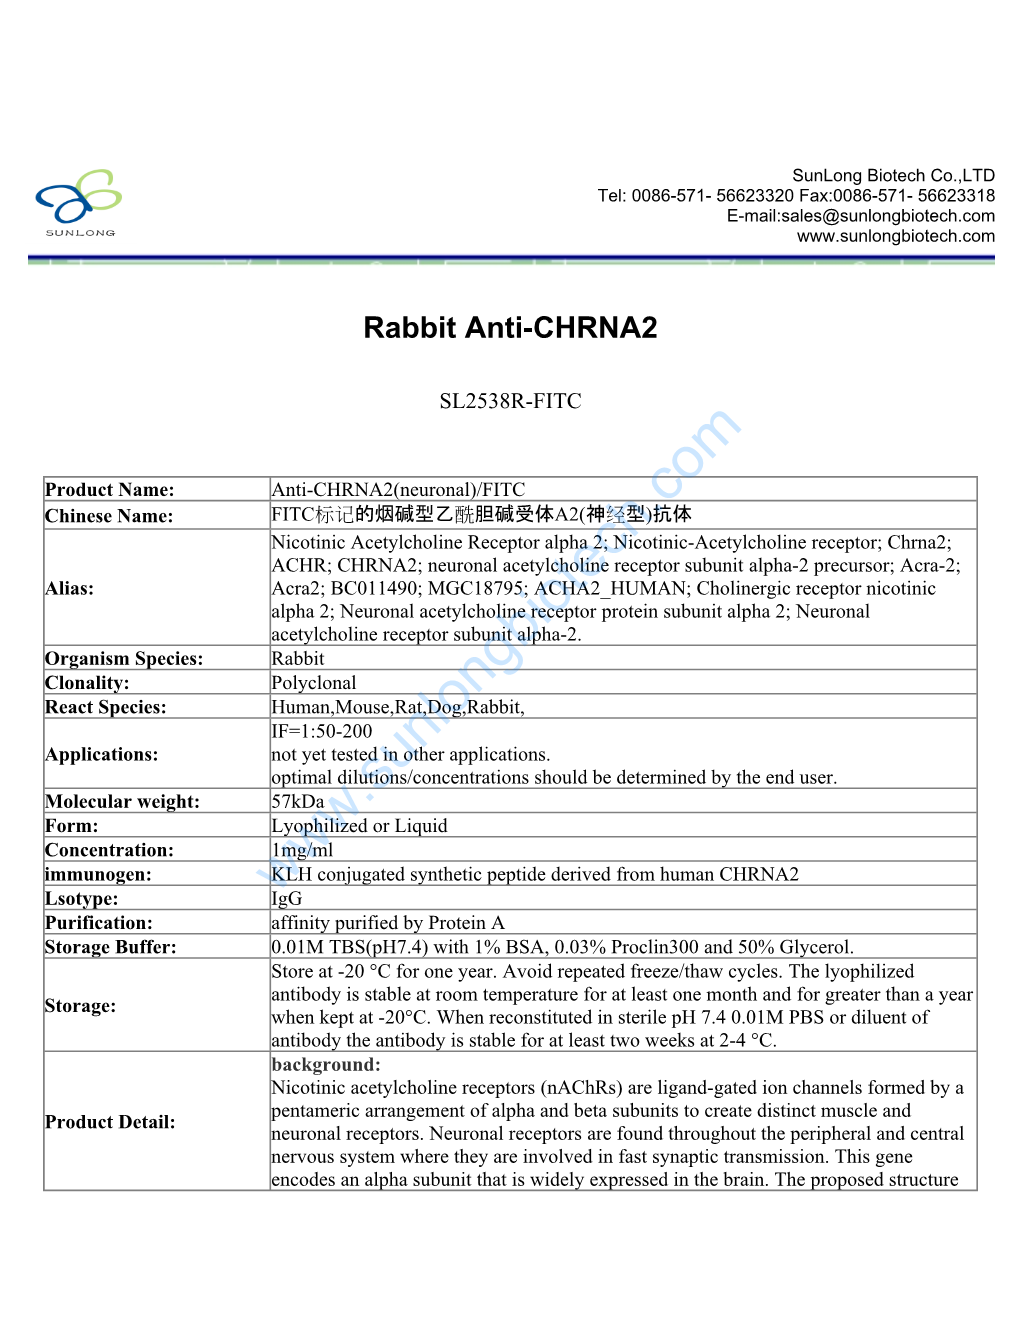 Rabbit Anti-CHRNA2-SL2538R-FITC